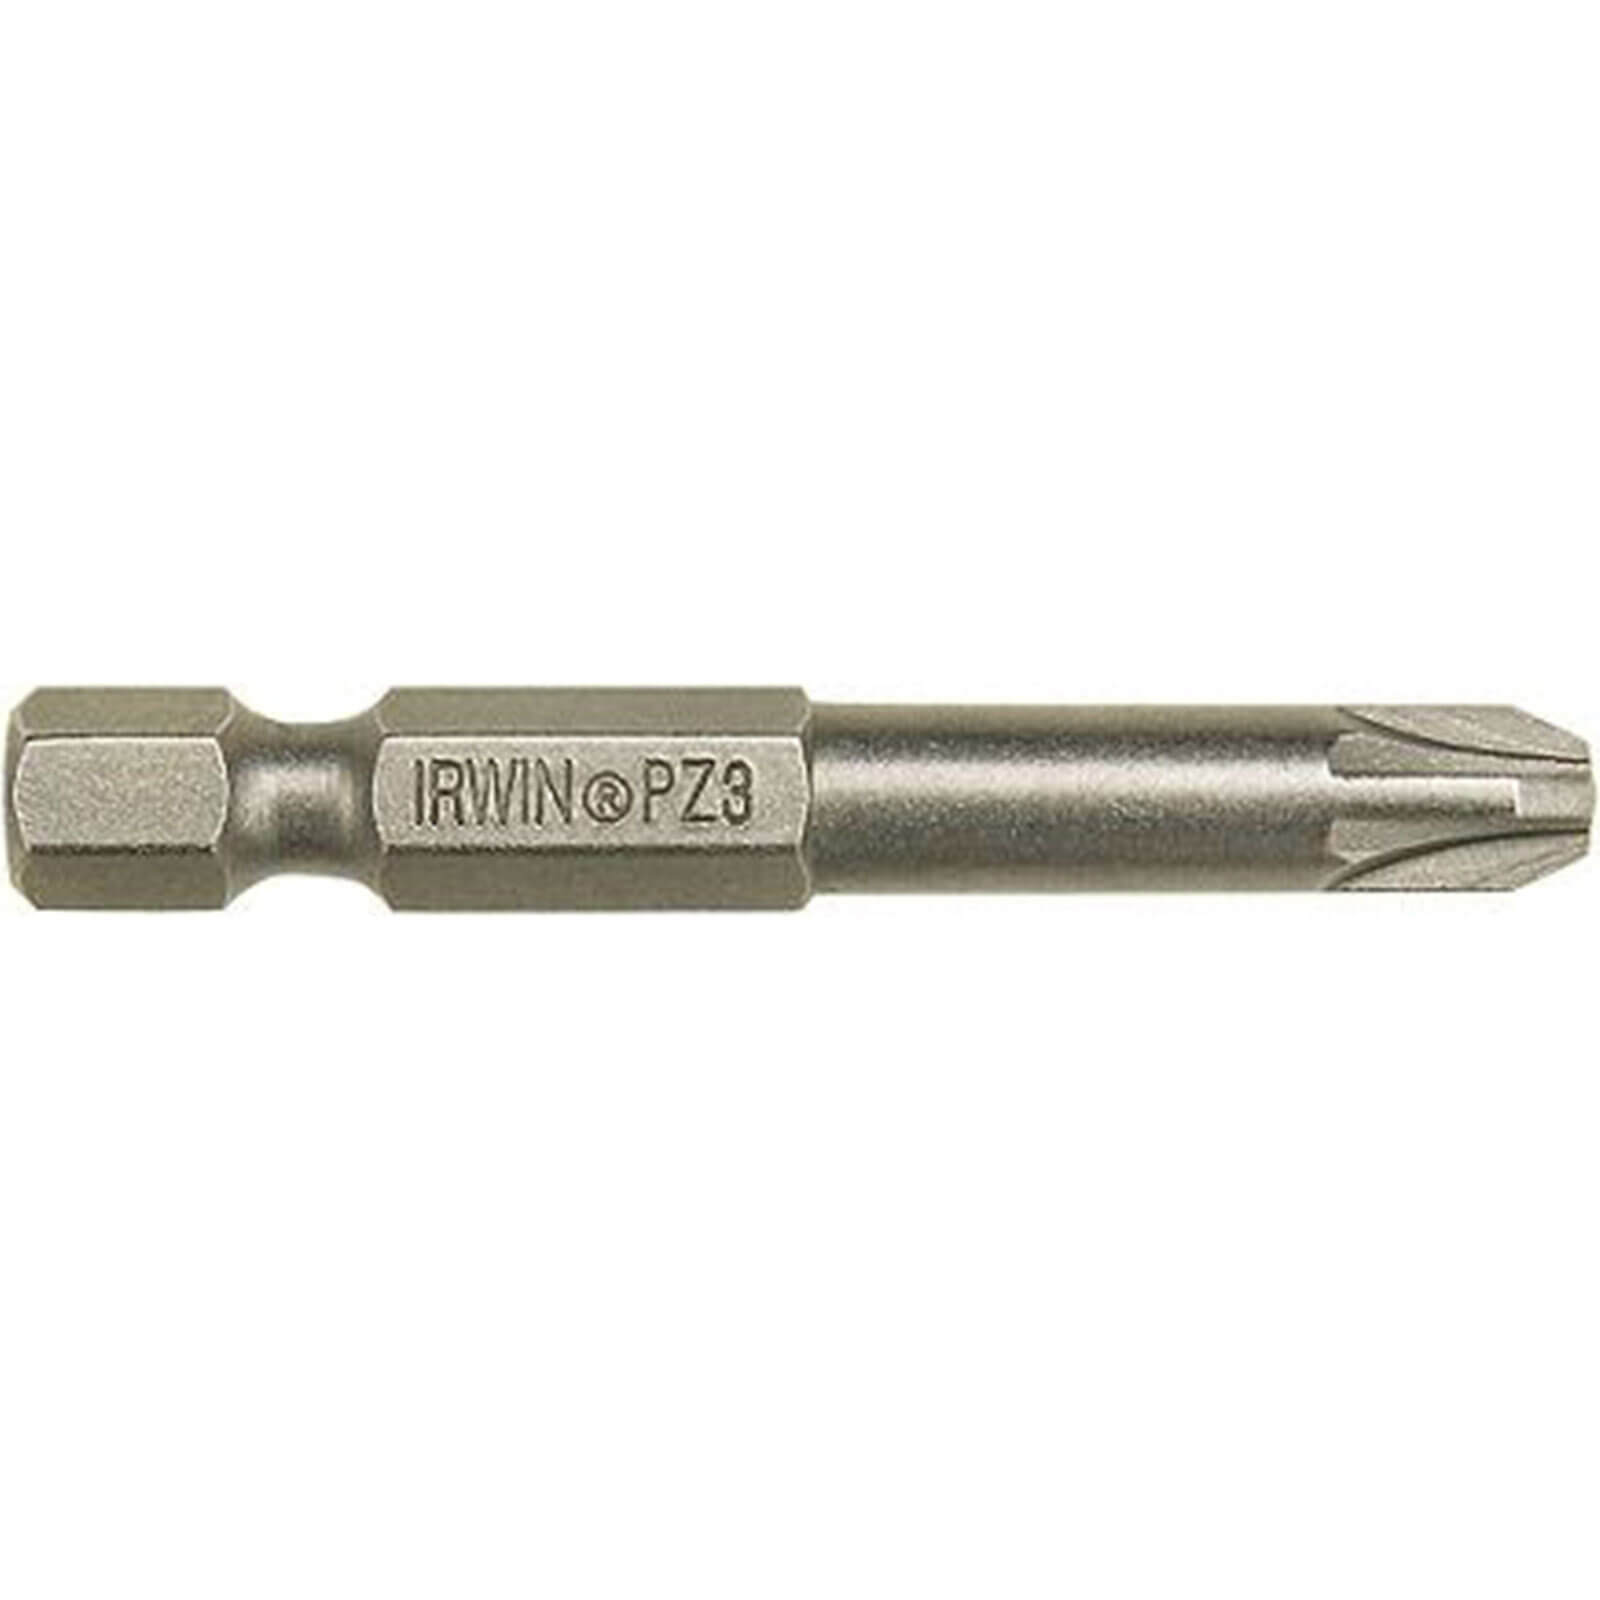 Photo of Irwin Pozi Power Screwdriver Bit Pz2 70mm Pack Of 1